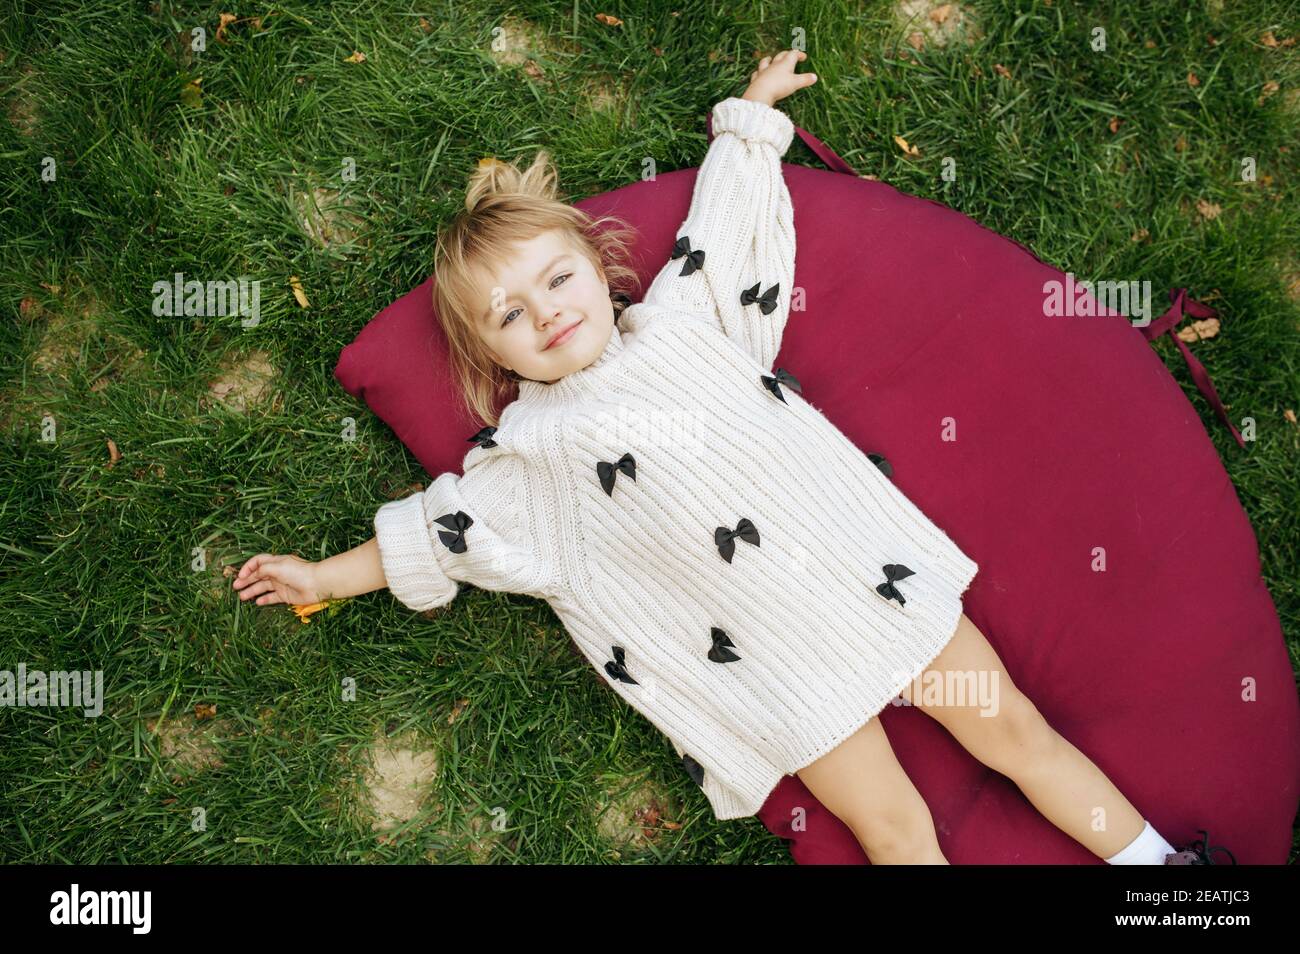 Little girl lying on the grass in the garden Stock Photo